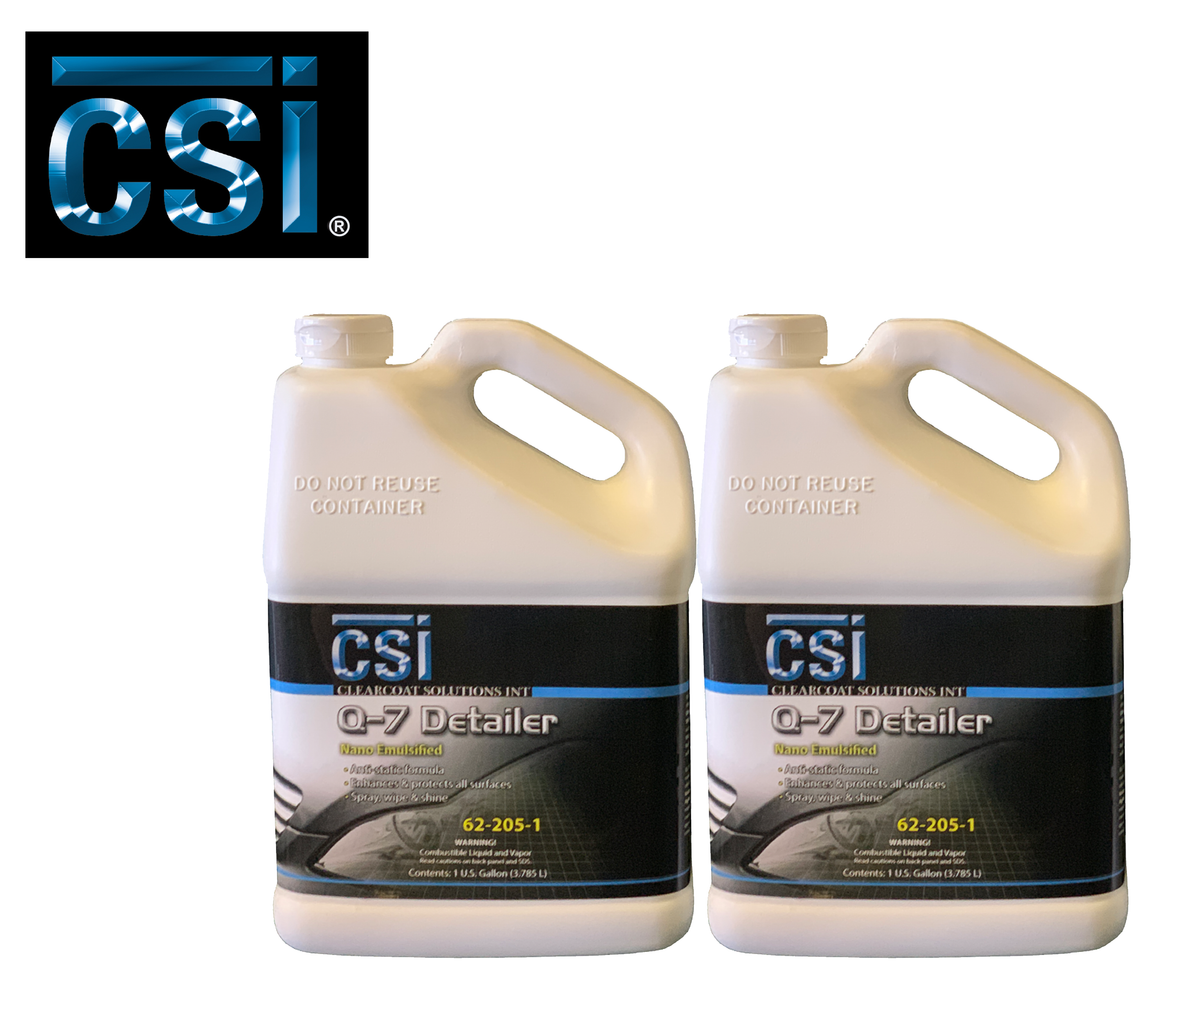 CSI 62-205-1 Q-7 Detailer (Gallon) two Gallon special offer